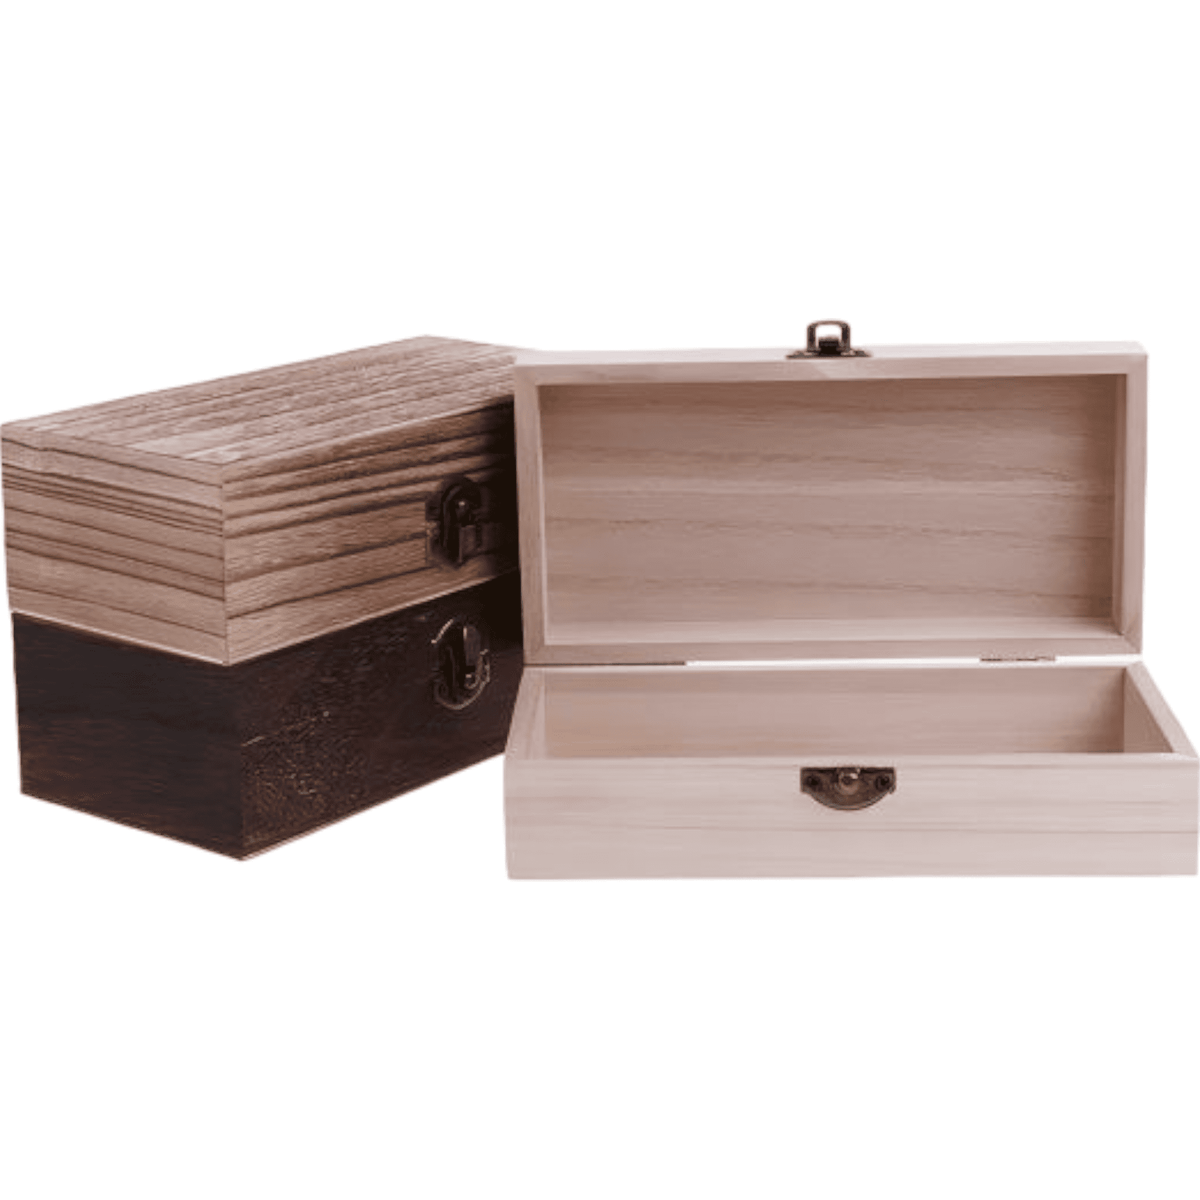 Retro Natural Wood Clamshell Storage Box